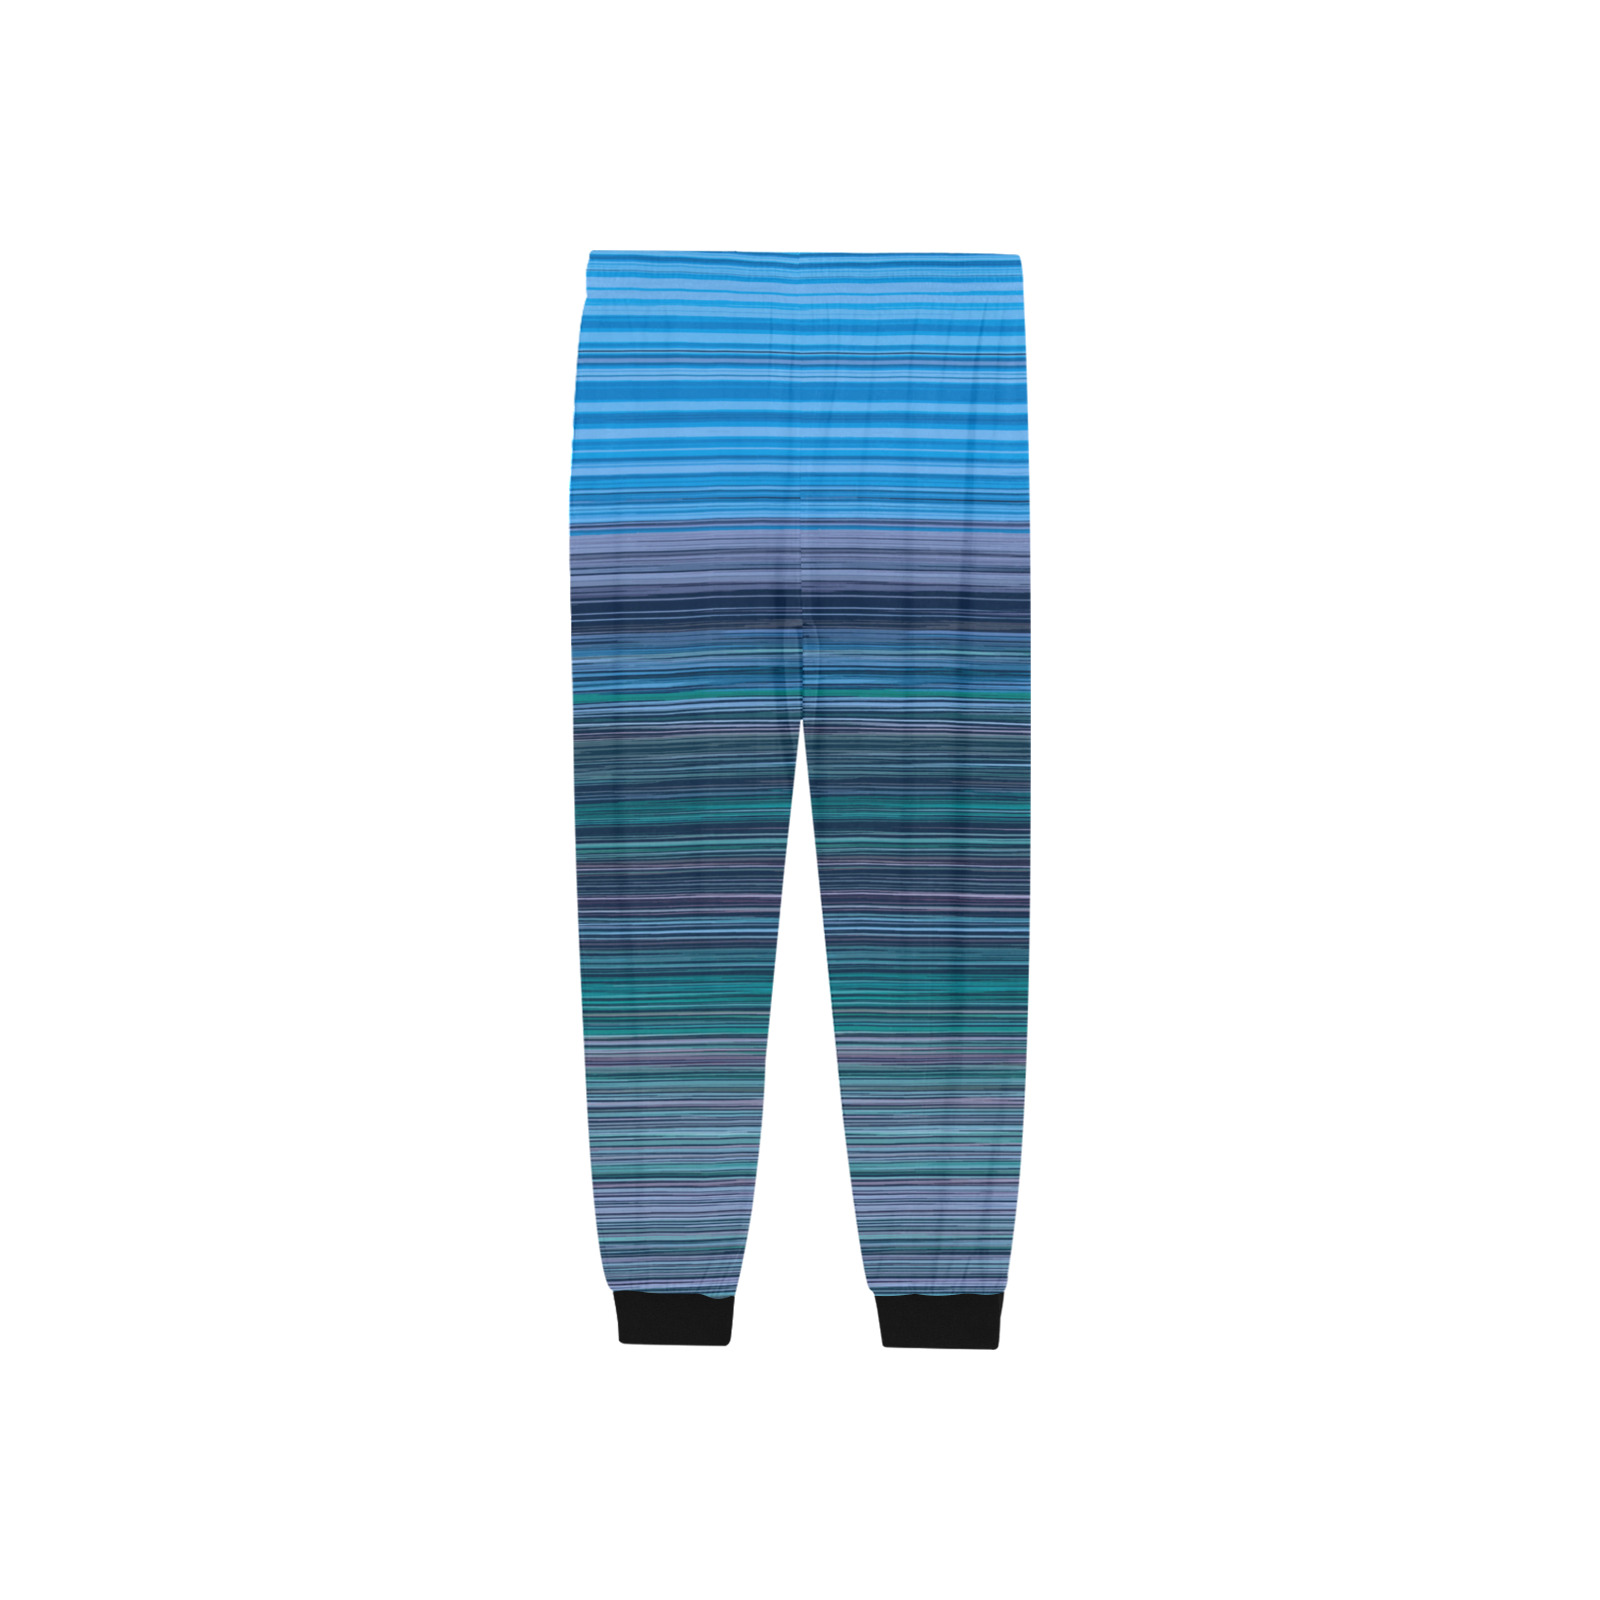 Abstract Blue Horizontal Stripes Men's Pajama Trousers